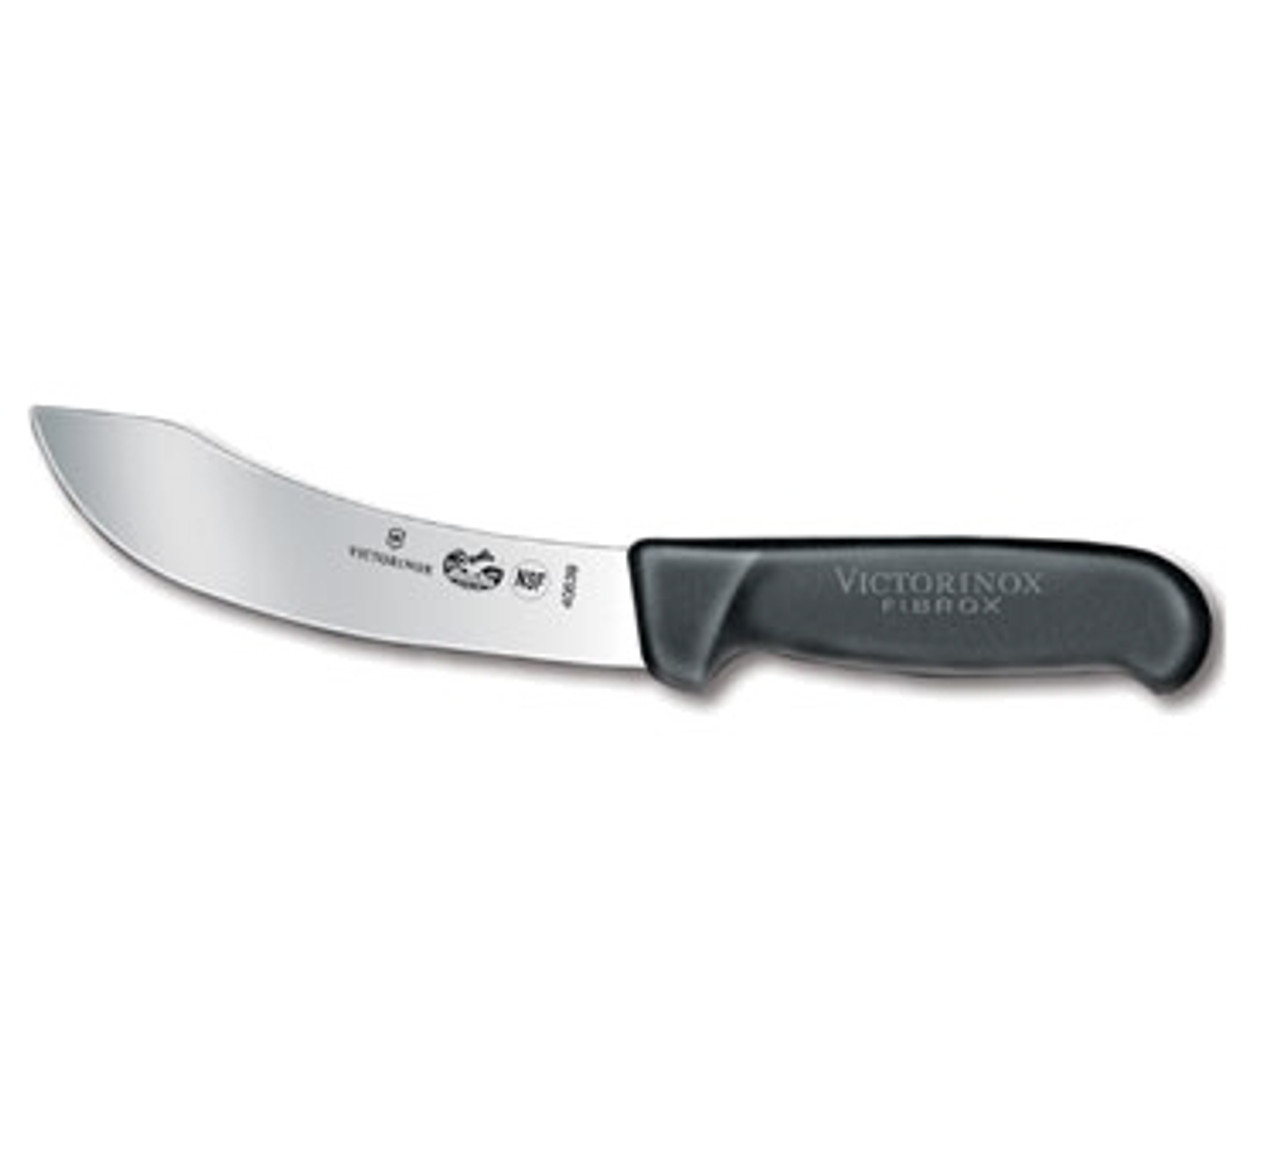 Victorinox 5.7703.15 6" Skinning Knife with Black Handle